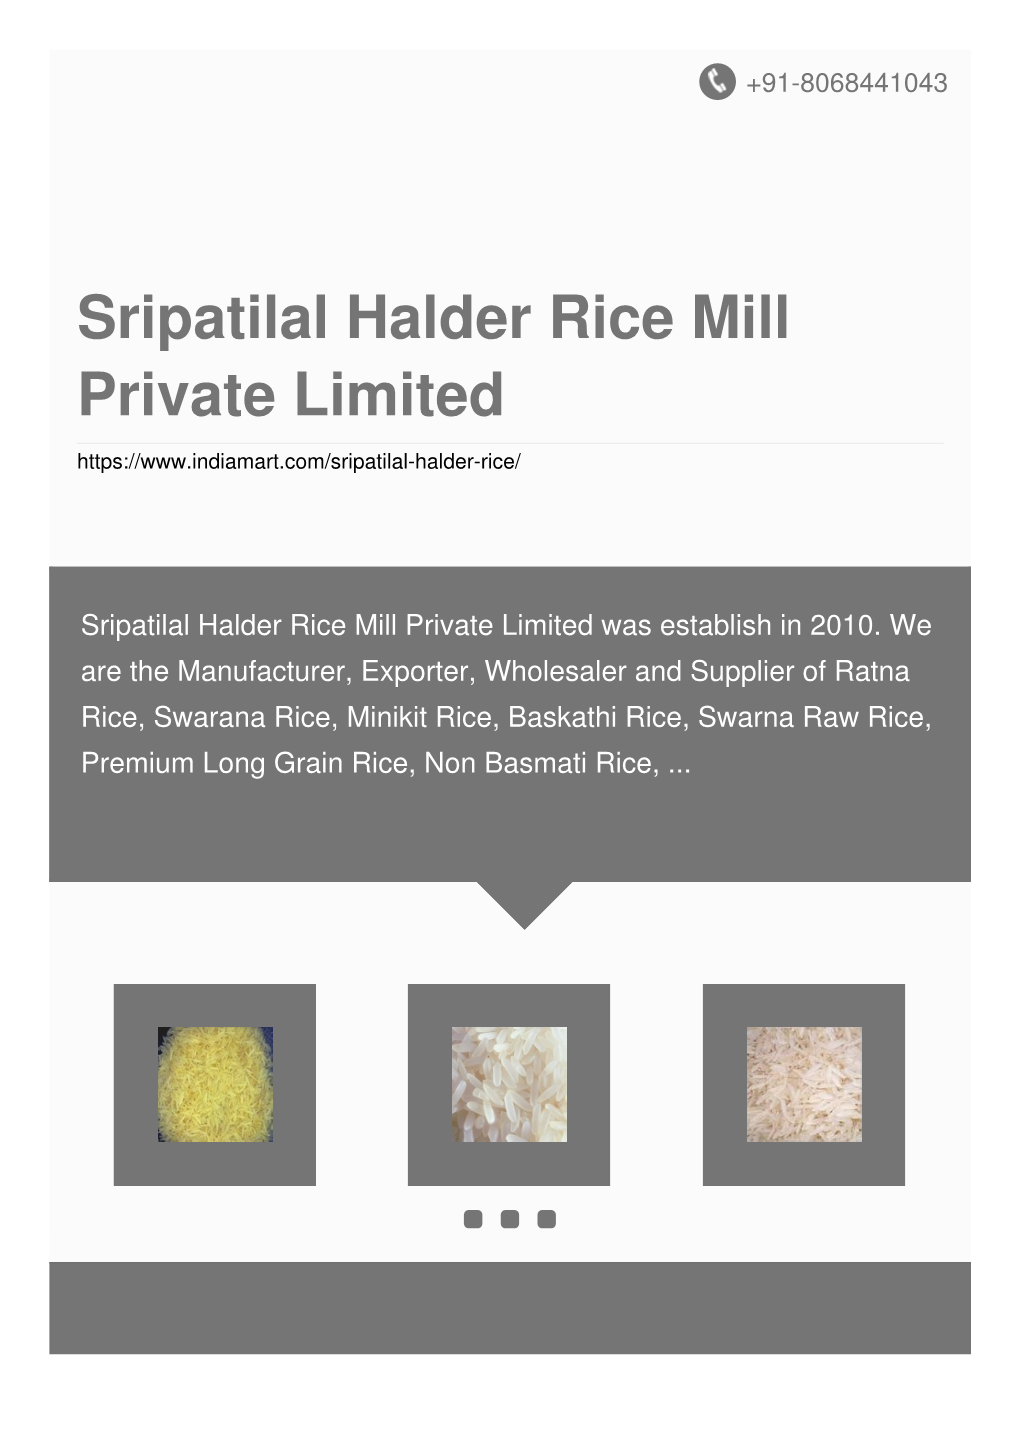 Sripatilal Halder Rice Mill Private Limited